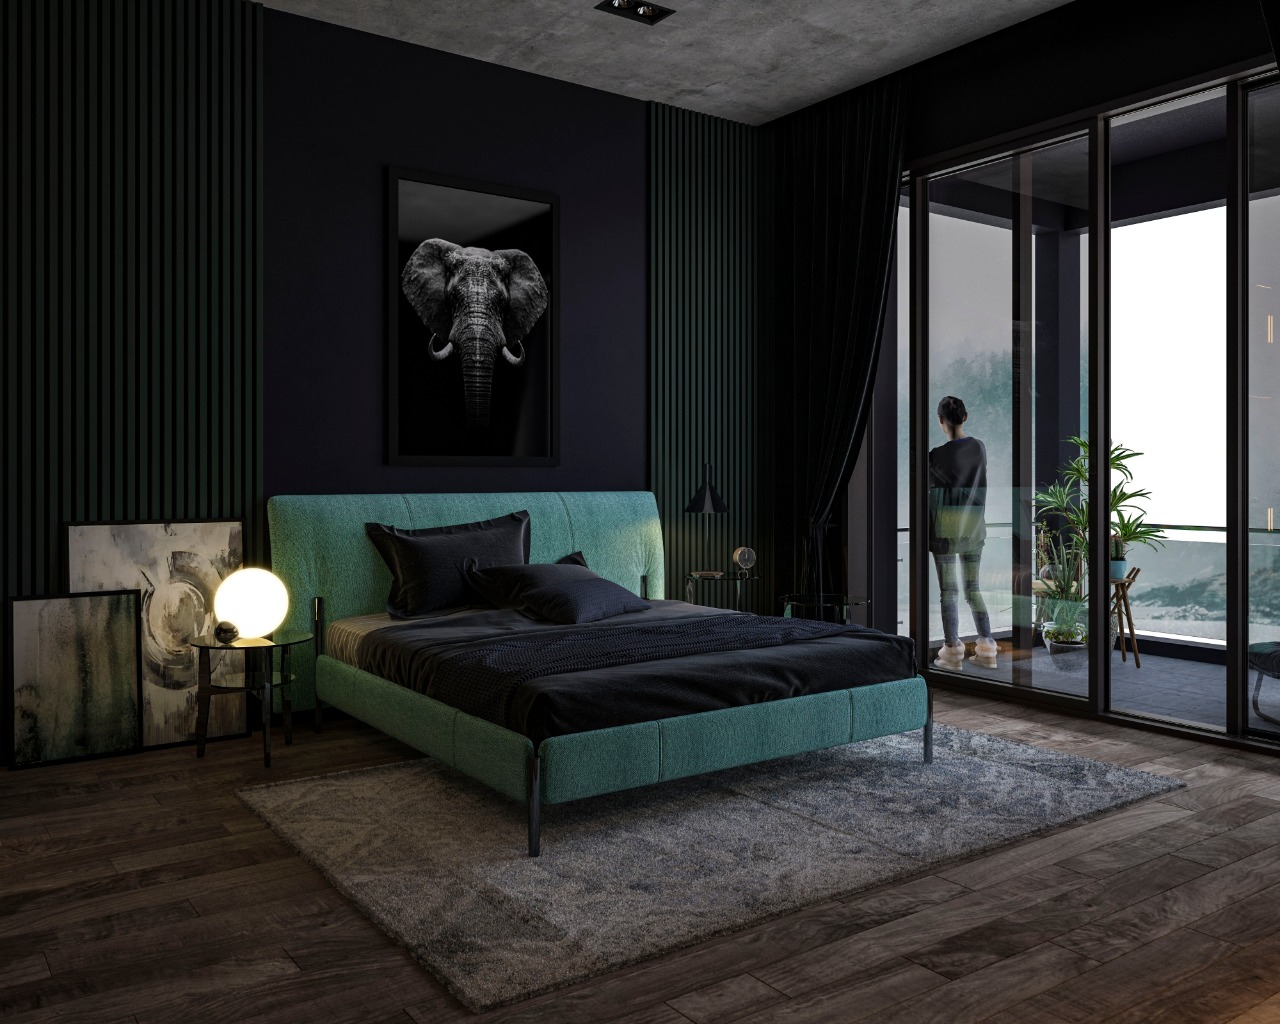 Bedroom Design With Dark Theme